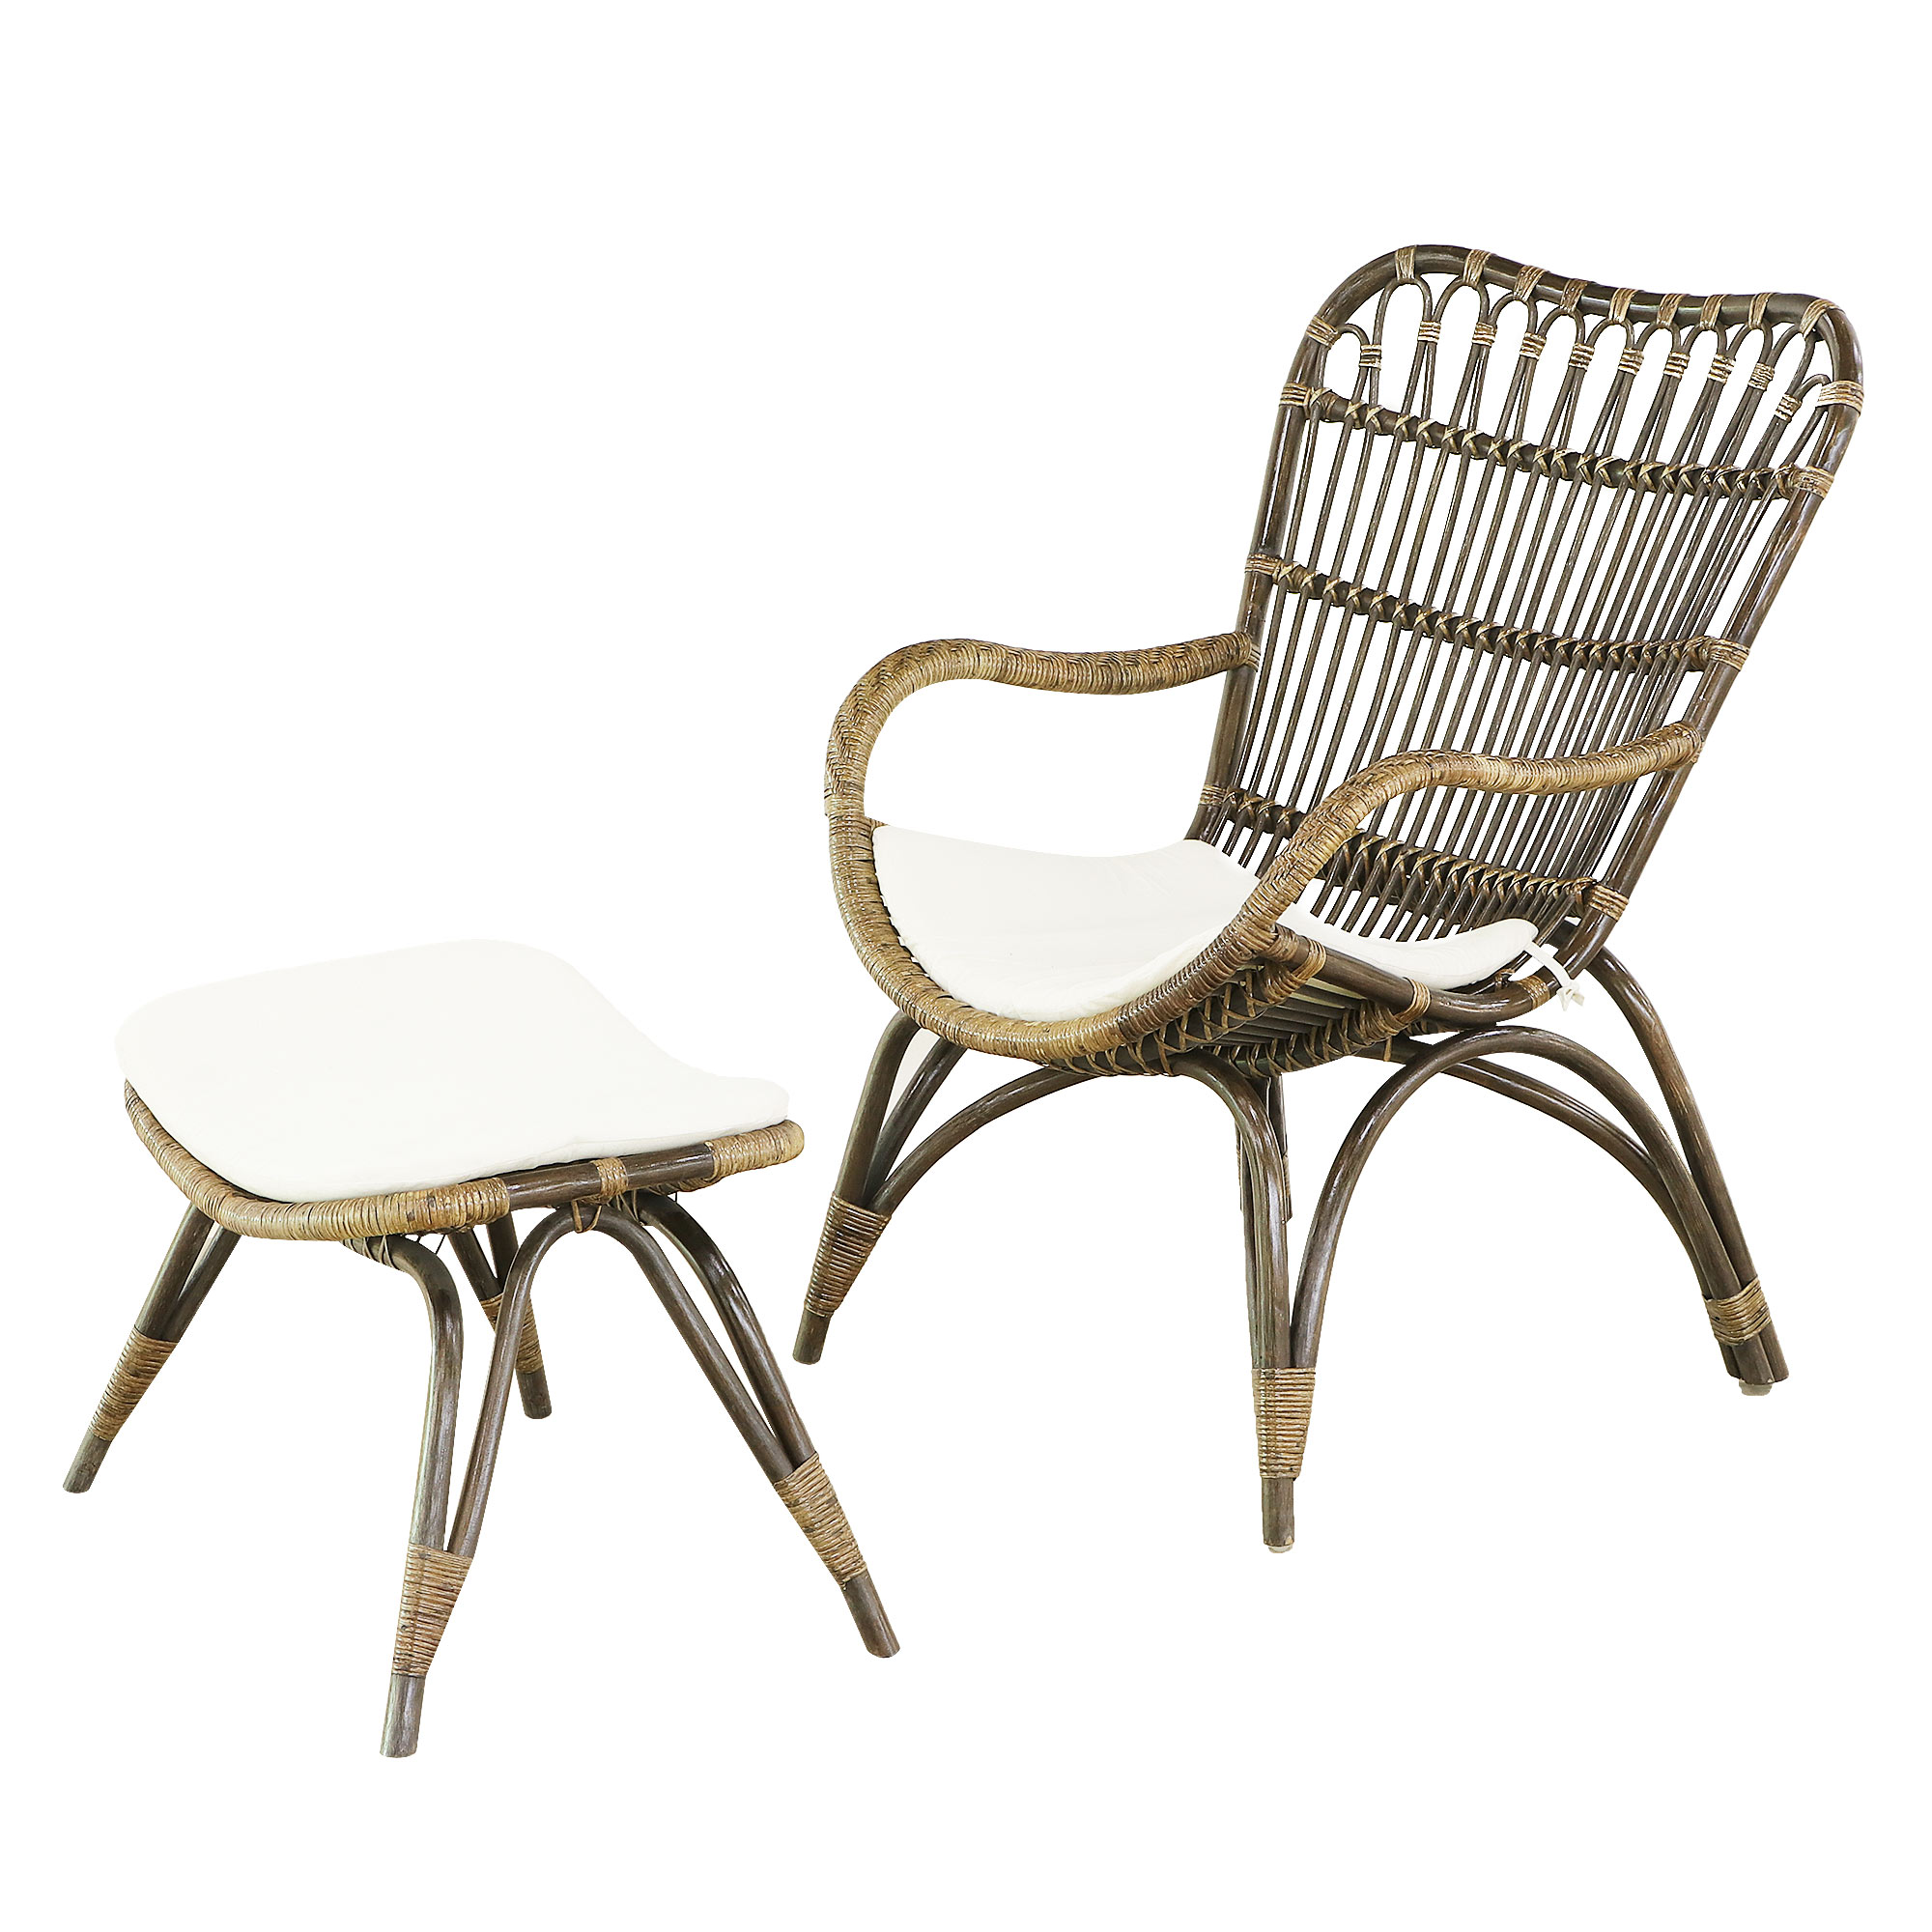 Комплект Rattan grand: кресло, оттоманка lounge md brown, цвет коричневый - фото 1